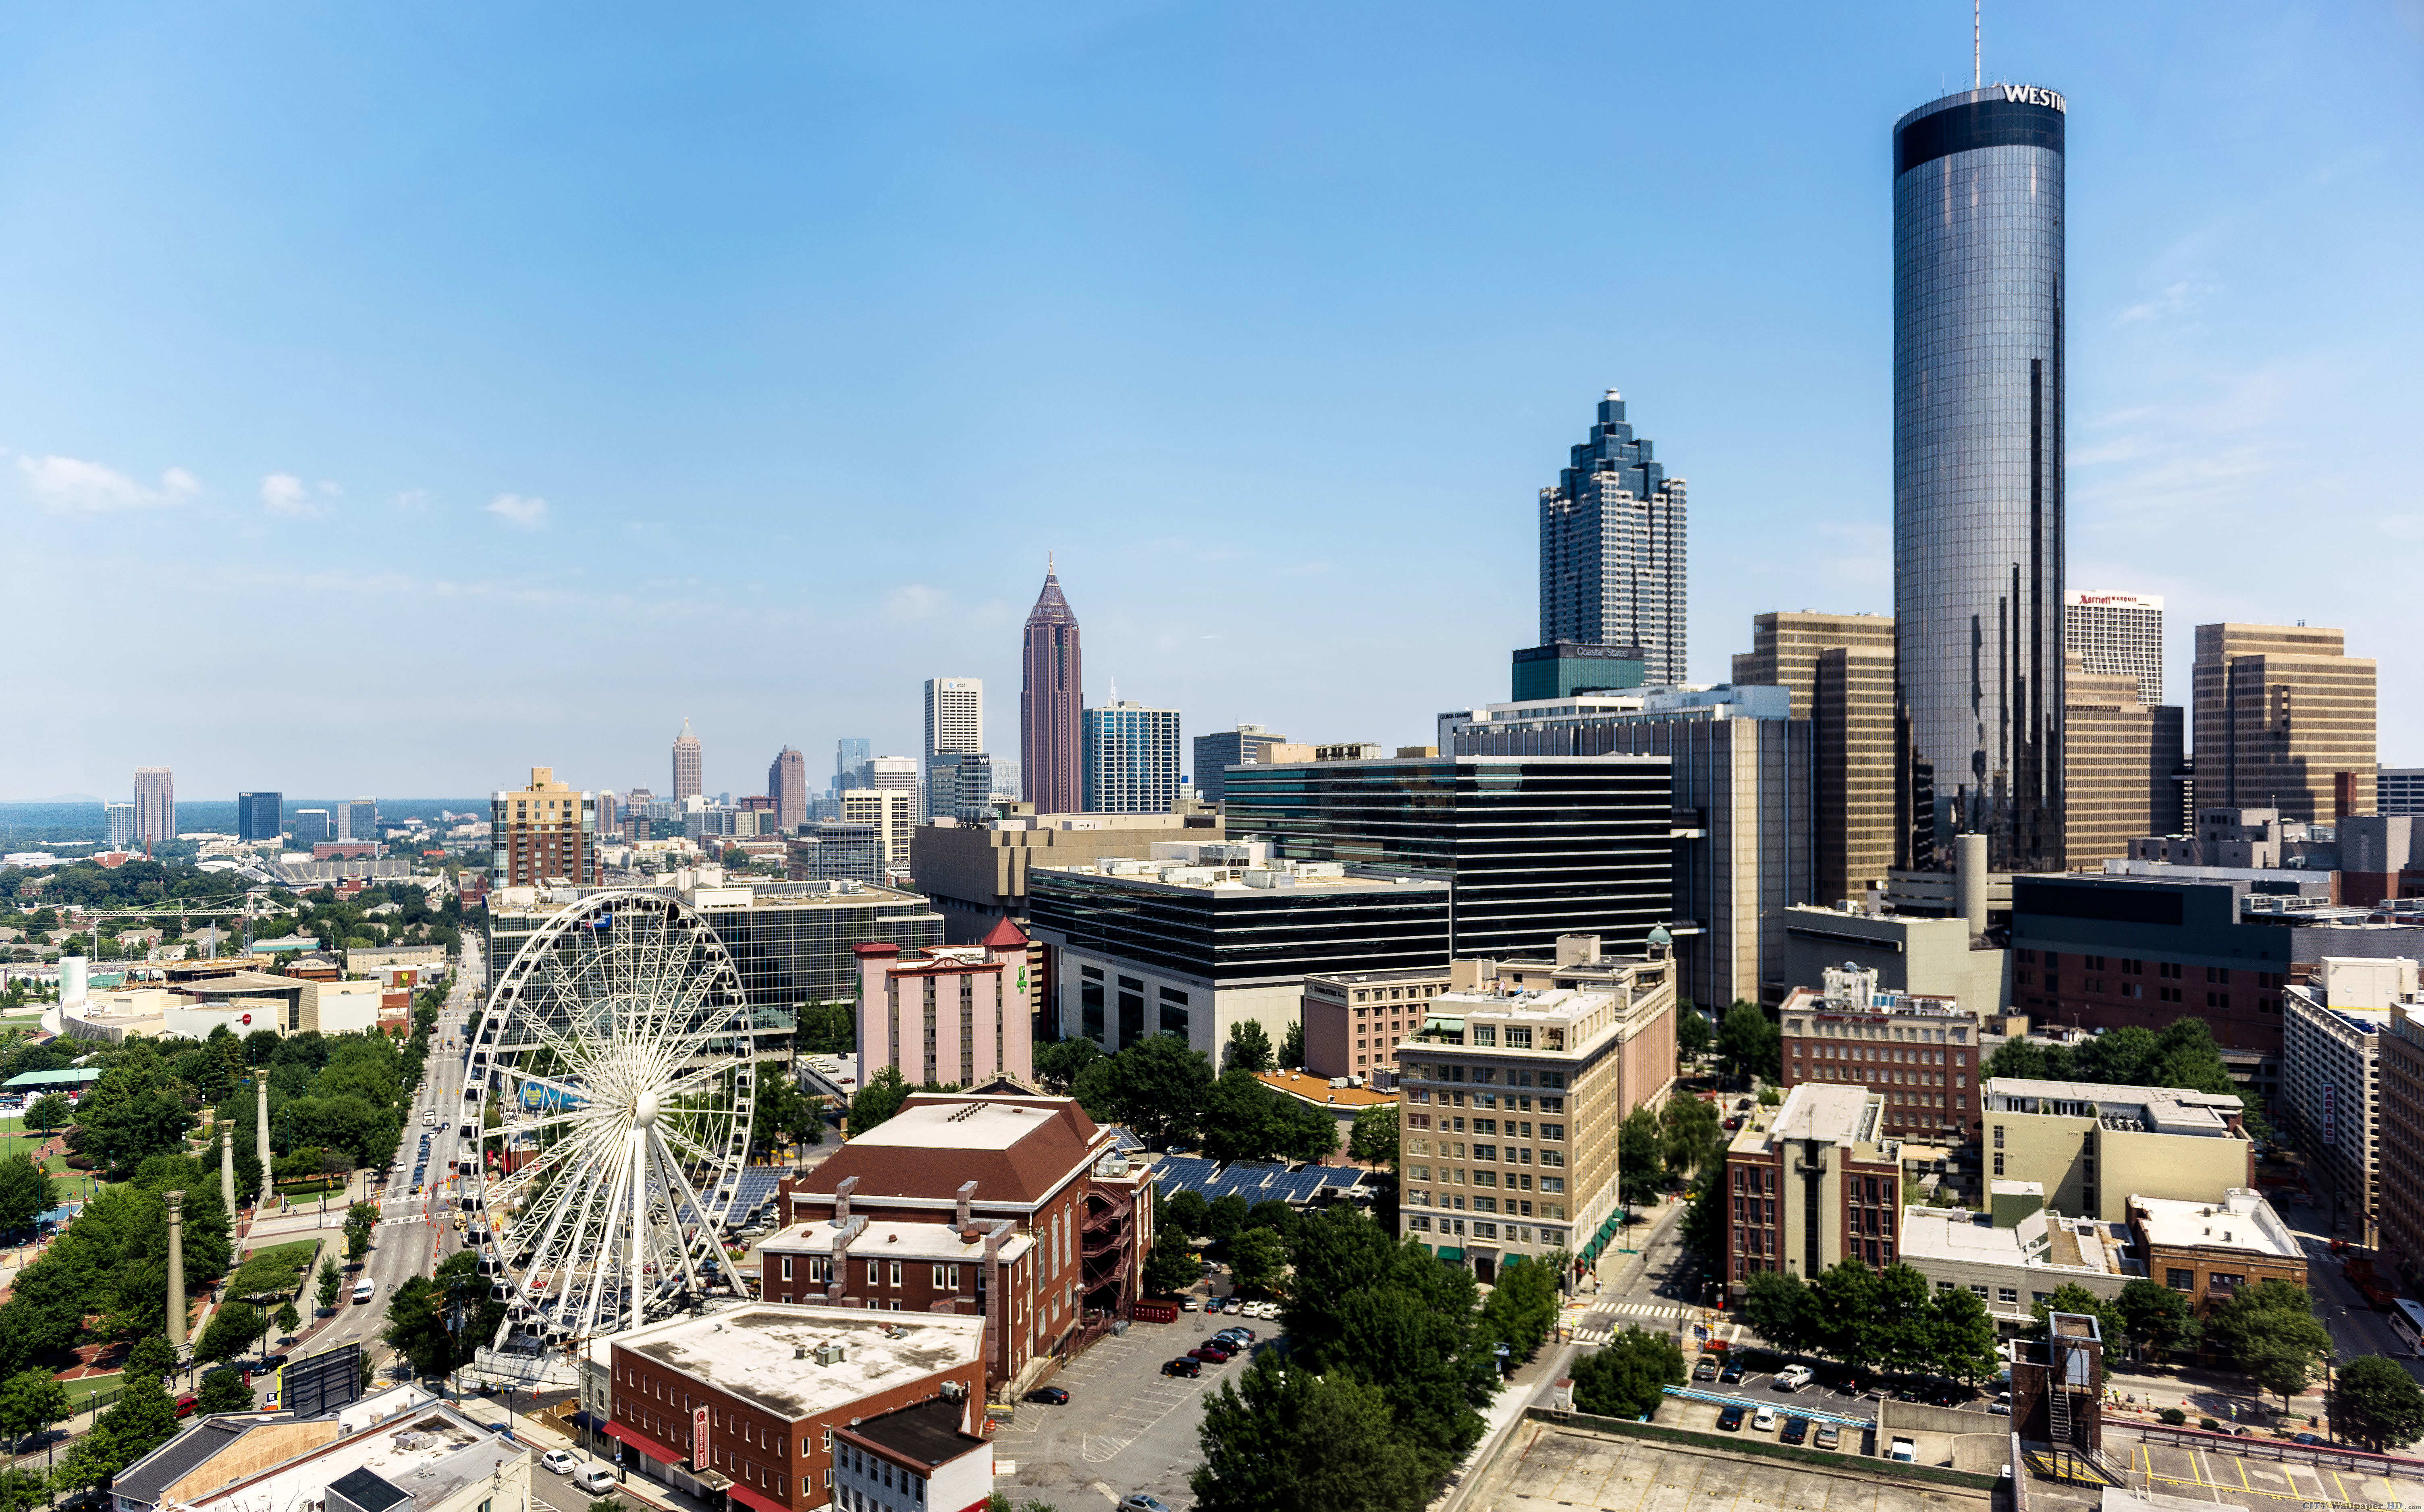 Atlanta wallpaper. To download image of the city. Atlanta, Georgia, USA